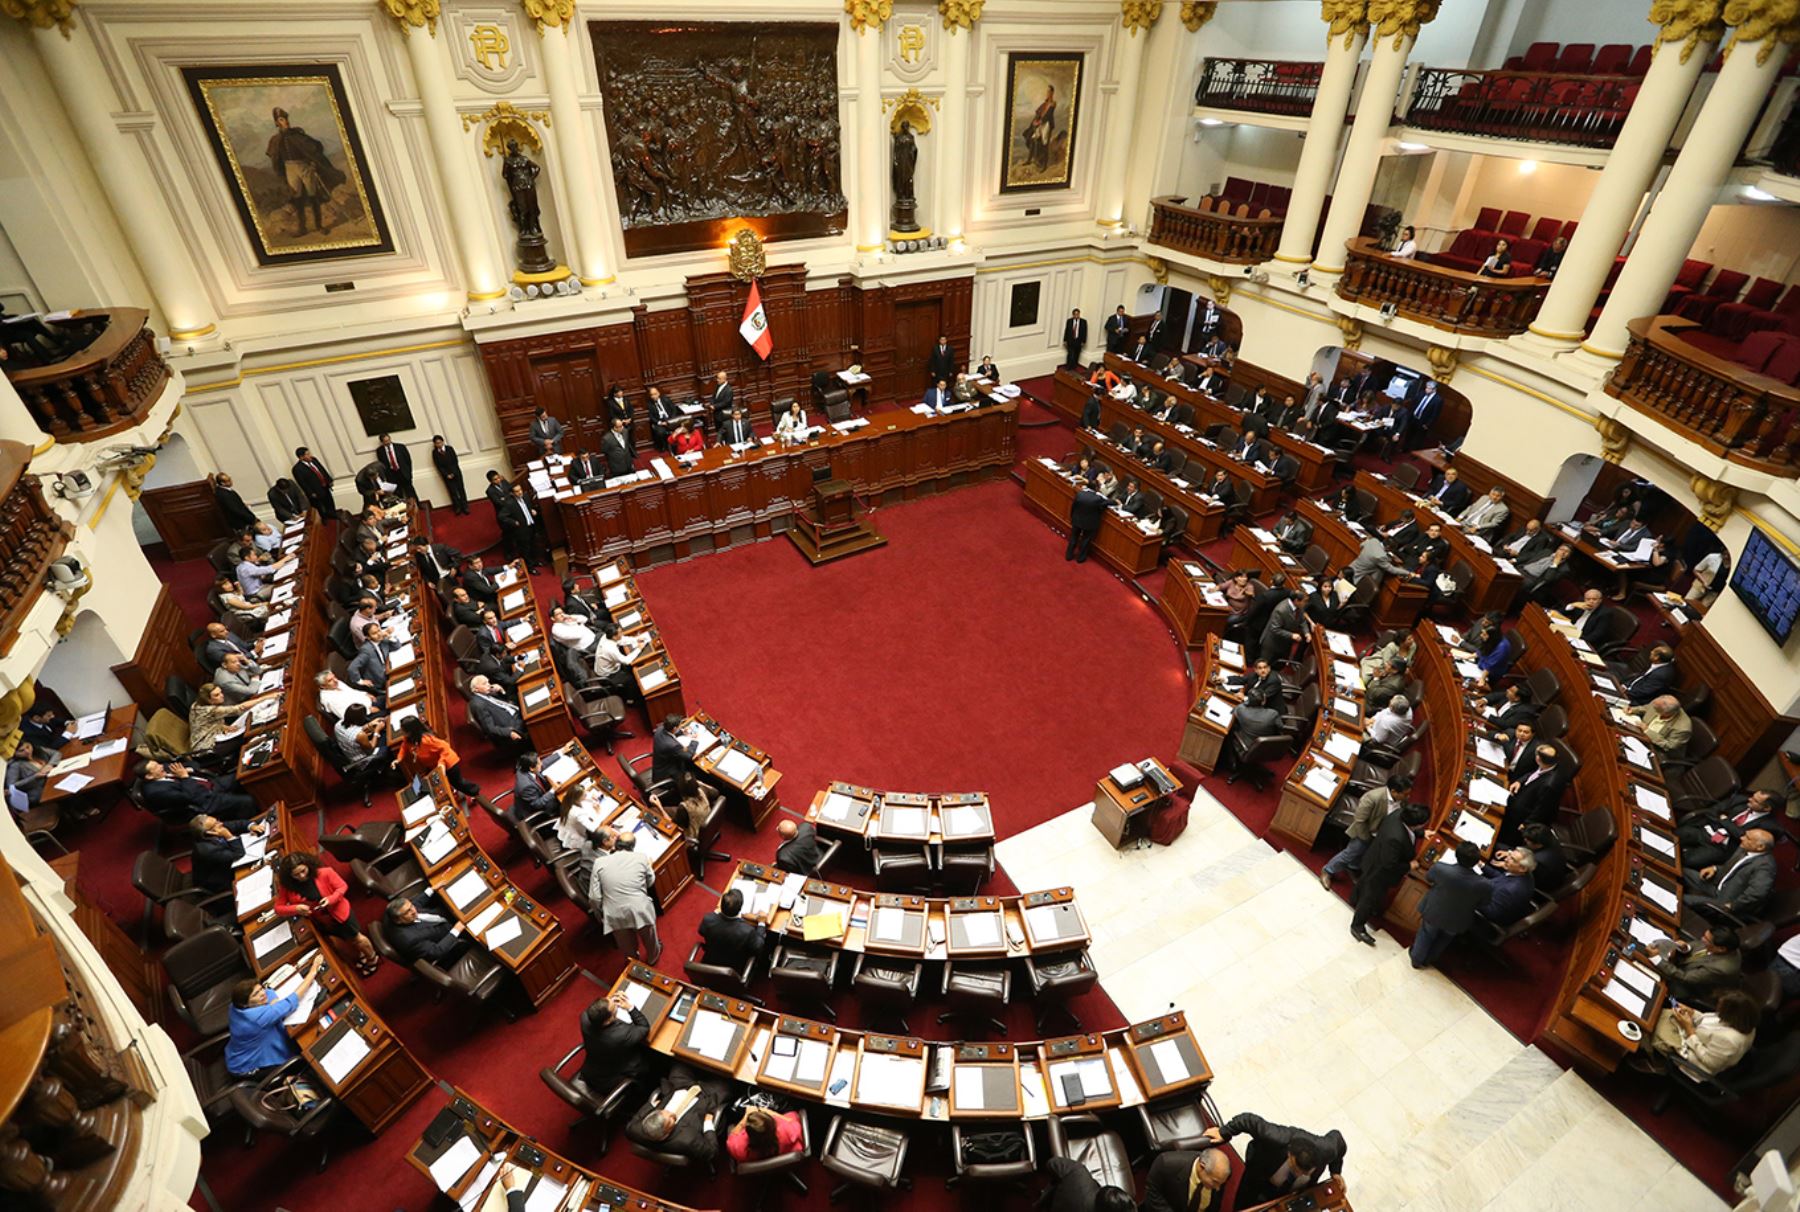 Congreso eleva asignación por representación a S/ 11,000: gasto anual supera S/ 5 millones